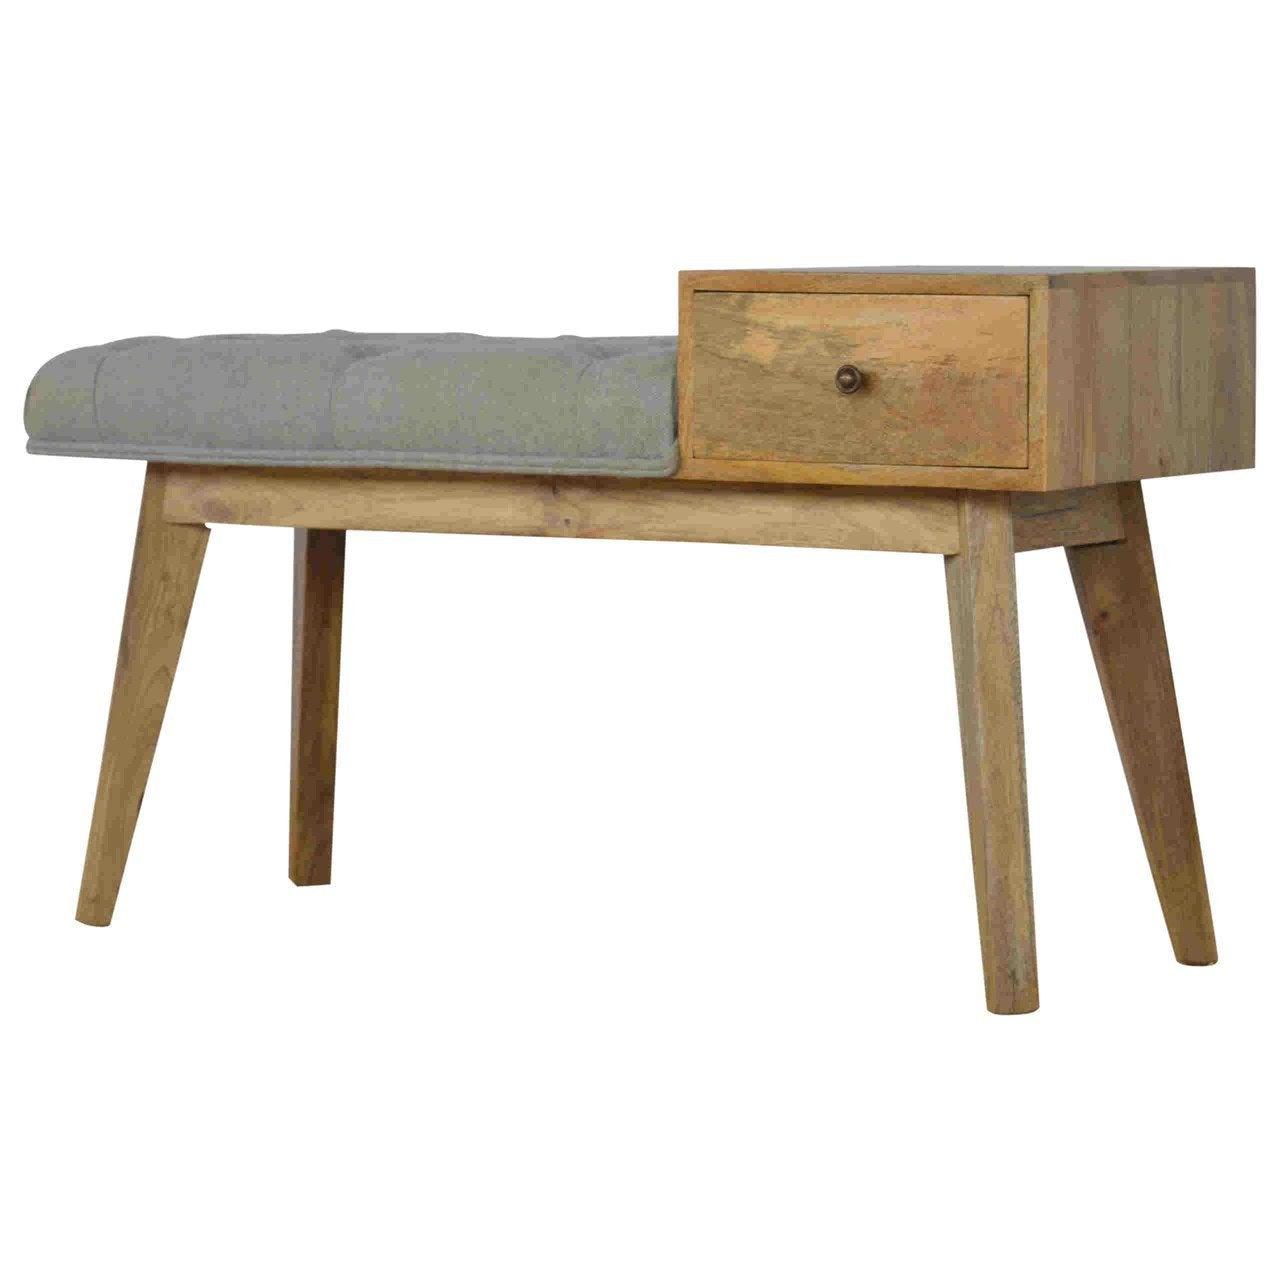 Grey tweed bench with 1 drawer - crimblefest furniture - image 5